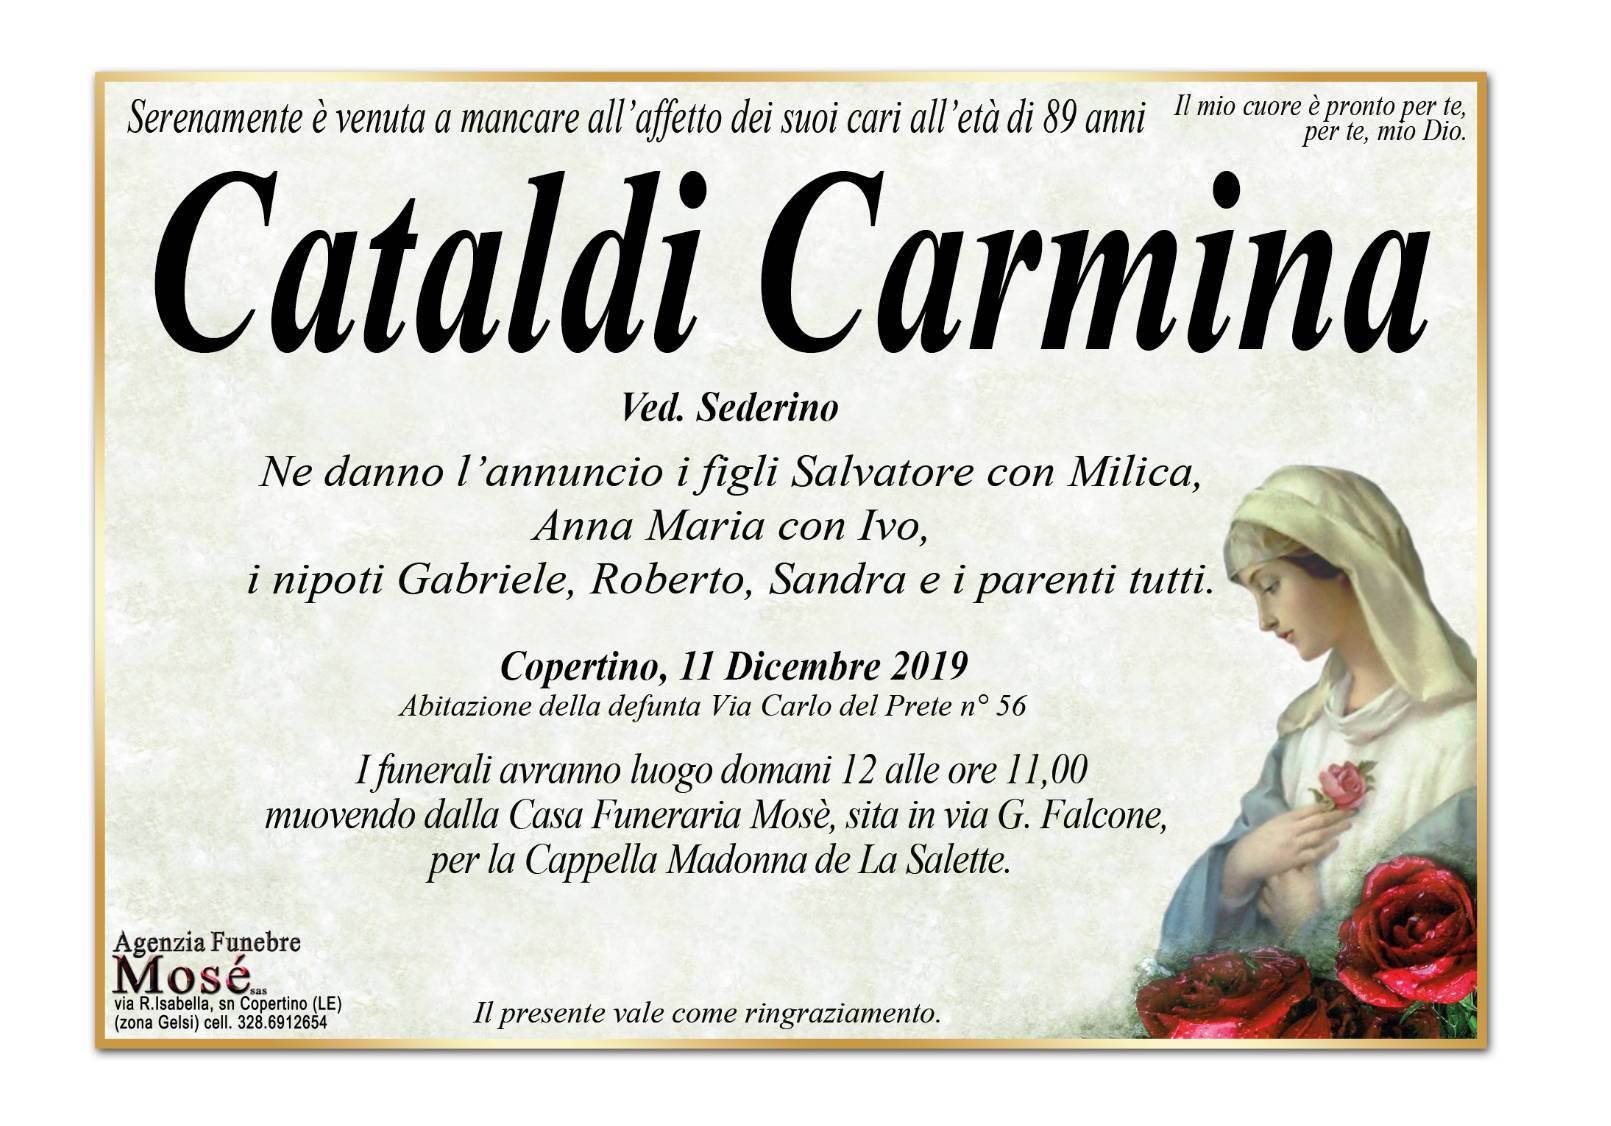 Carmina Cataldi